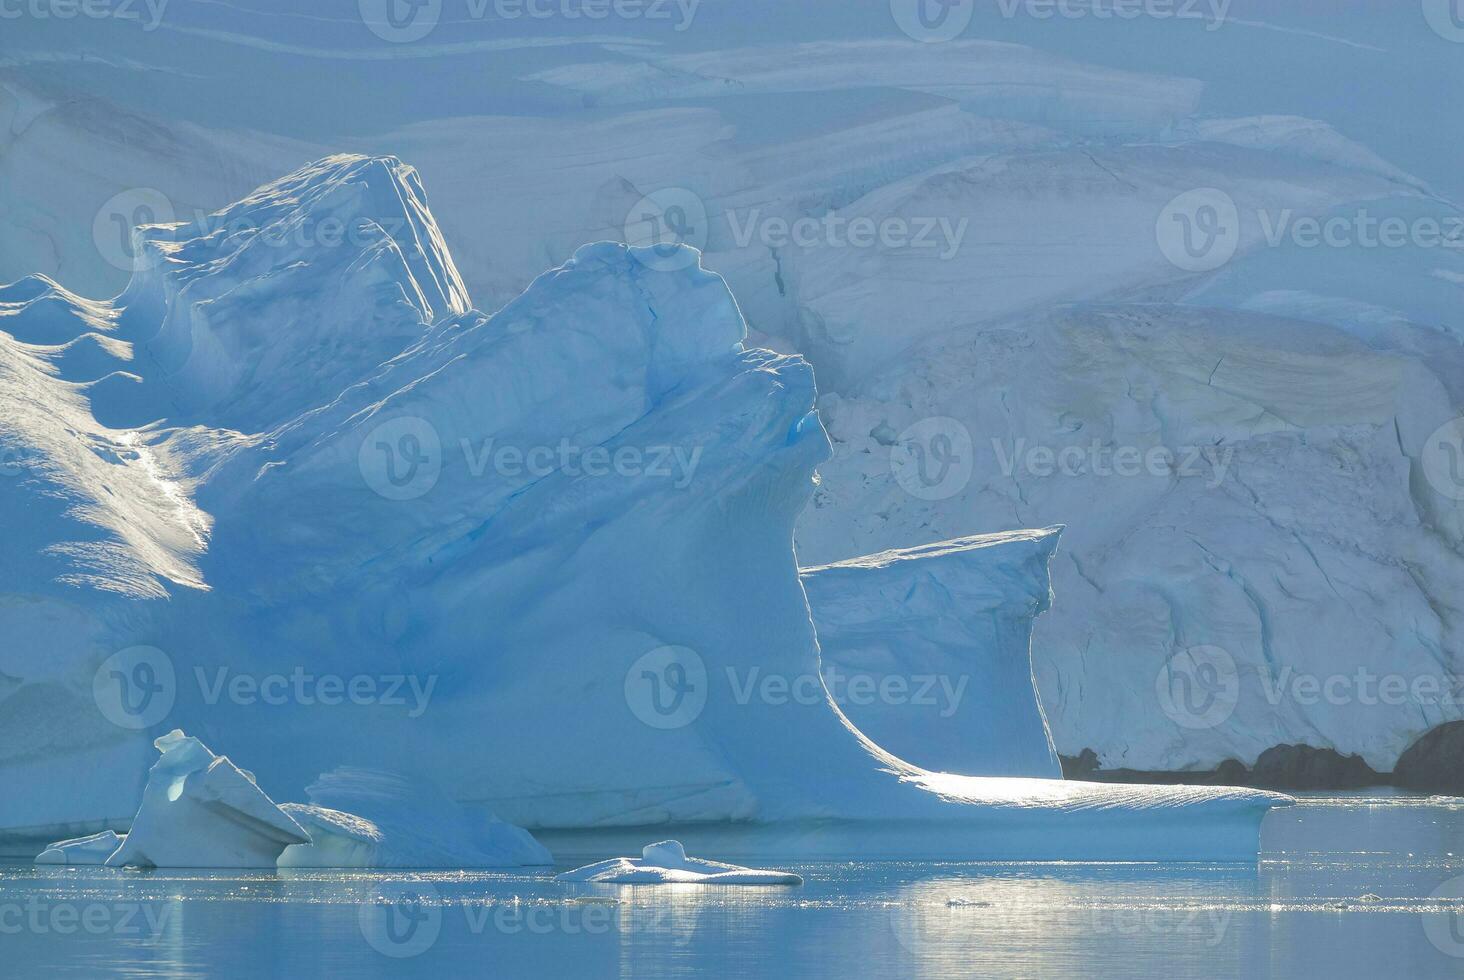 flytande isberg i paradis bukt, antartica. foto